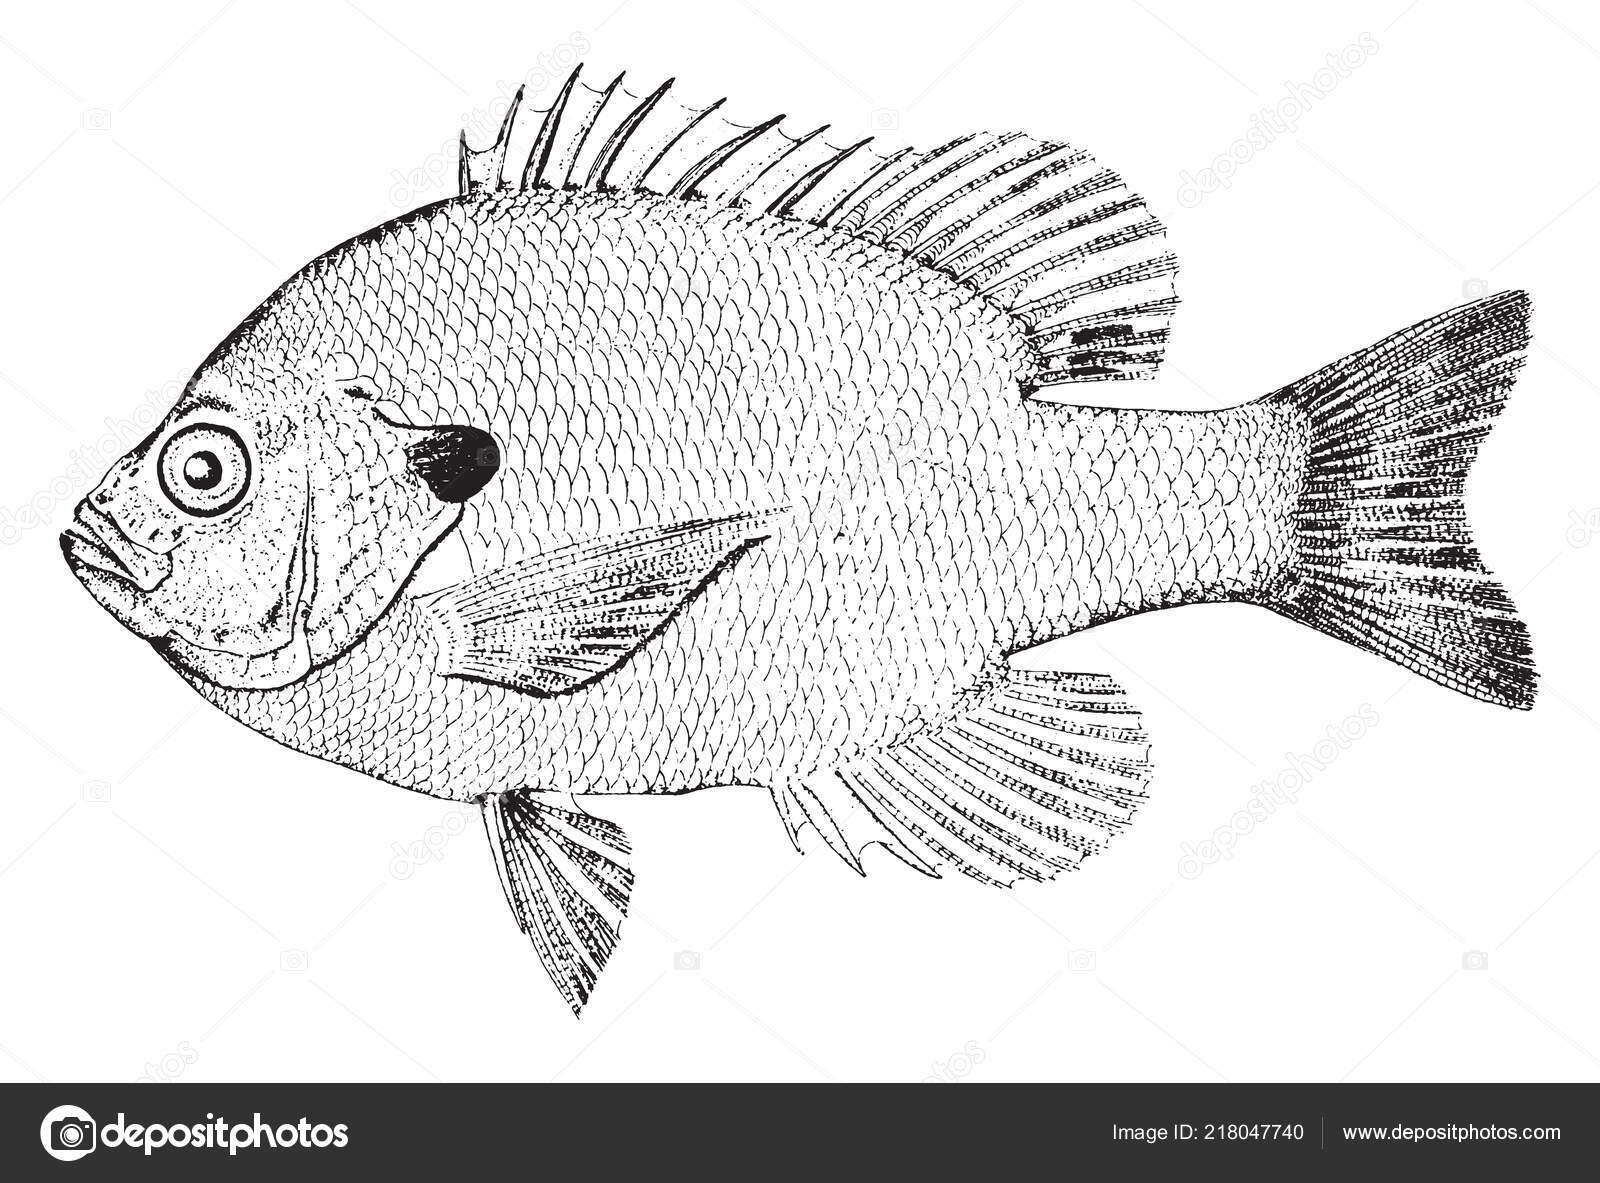 Bluegill Sunfish Species Freshwater Fish Sometimes Referred Bream